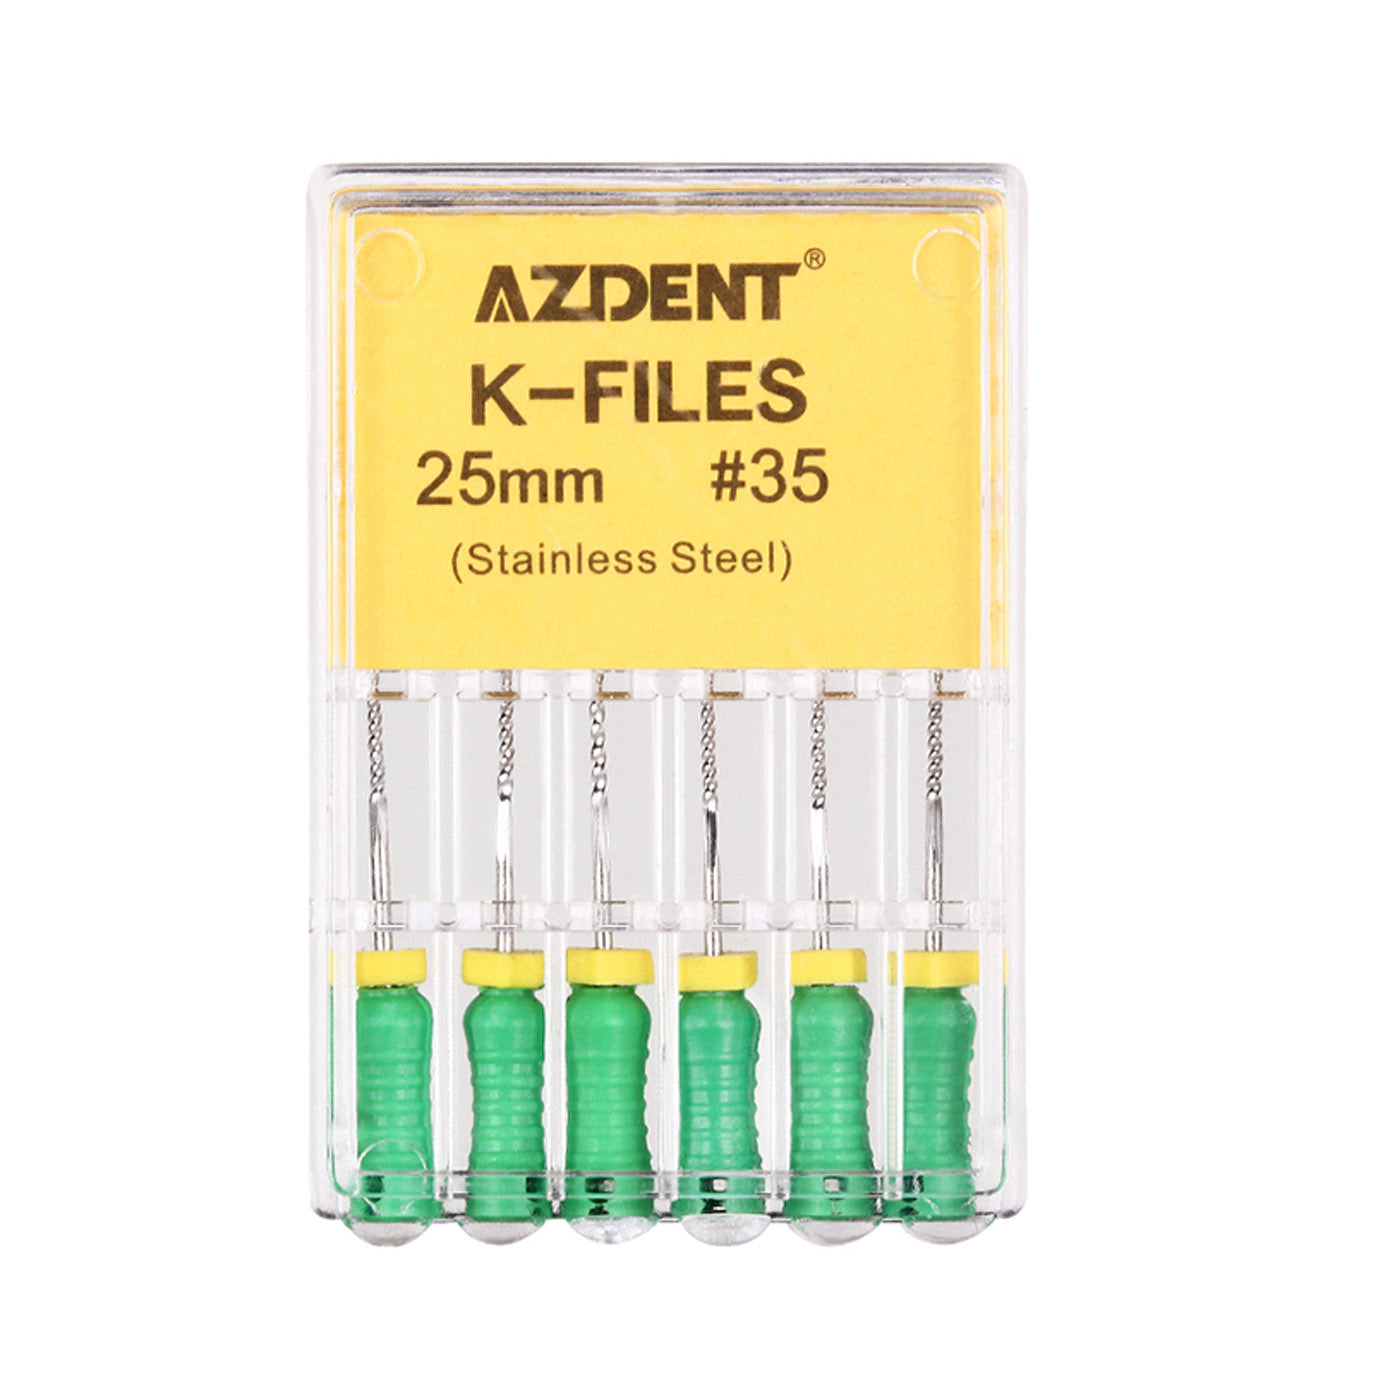 AZDENT Dental Hand K-Files Stainless Steel 25mm #35 Green 6pcs/Box-azdentall.com